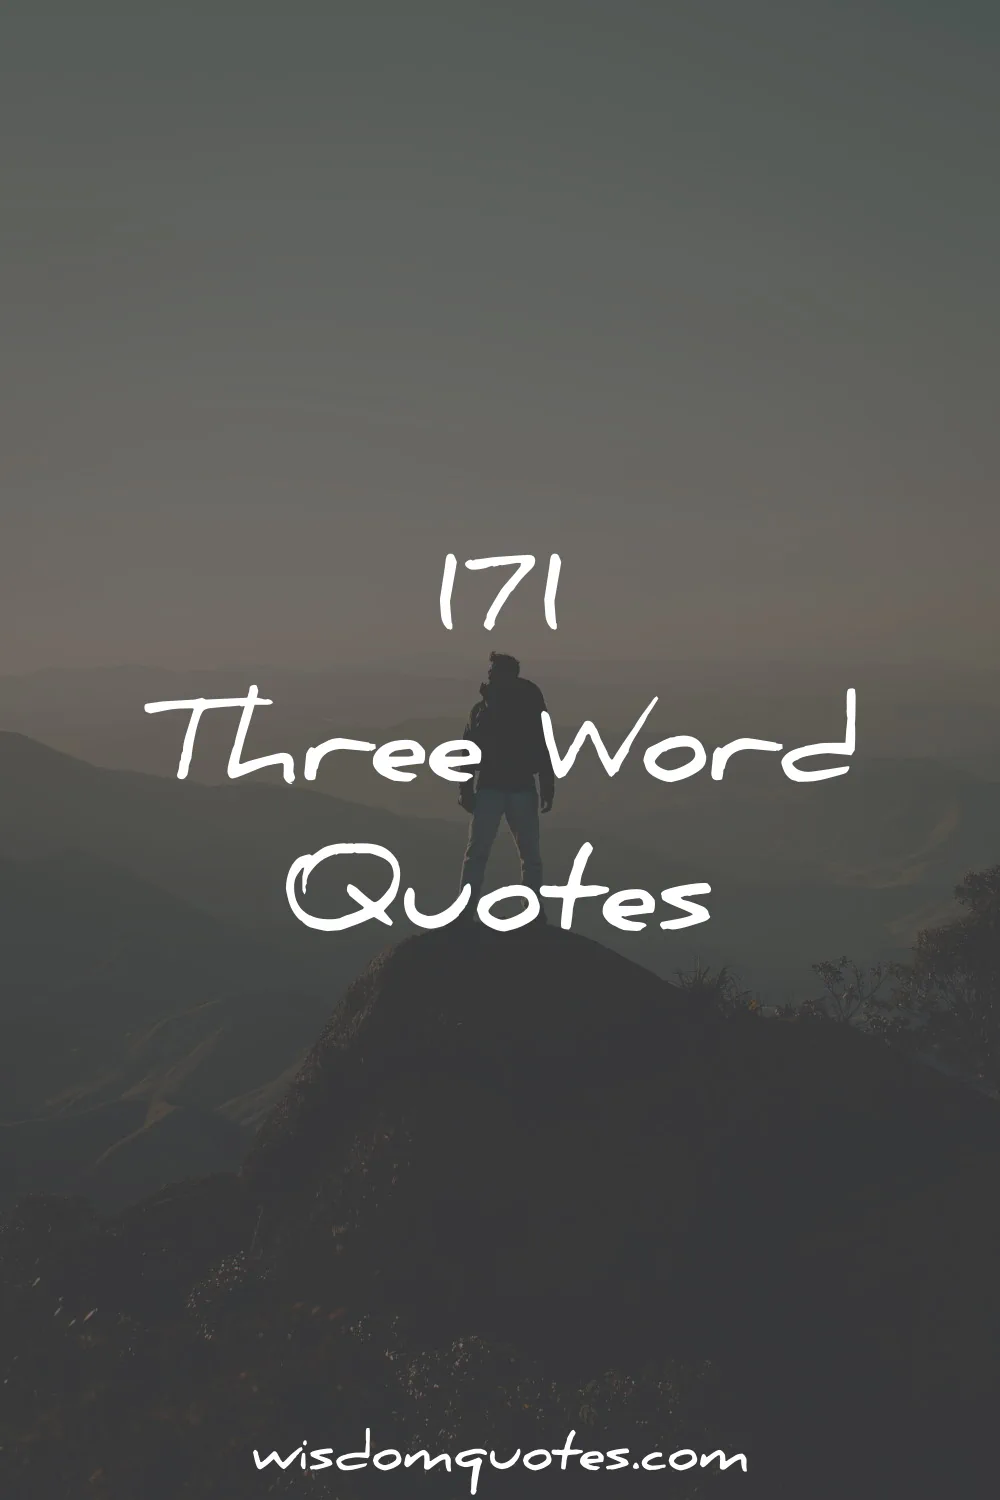 three-word quotes wisdom